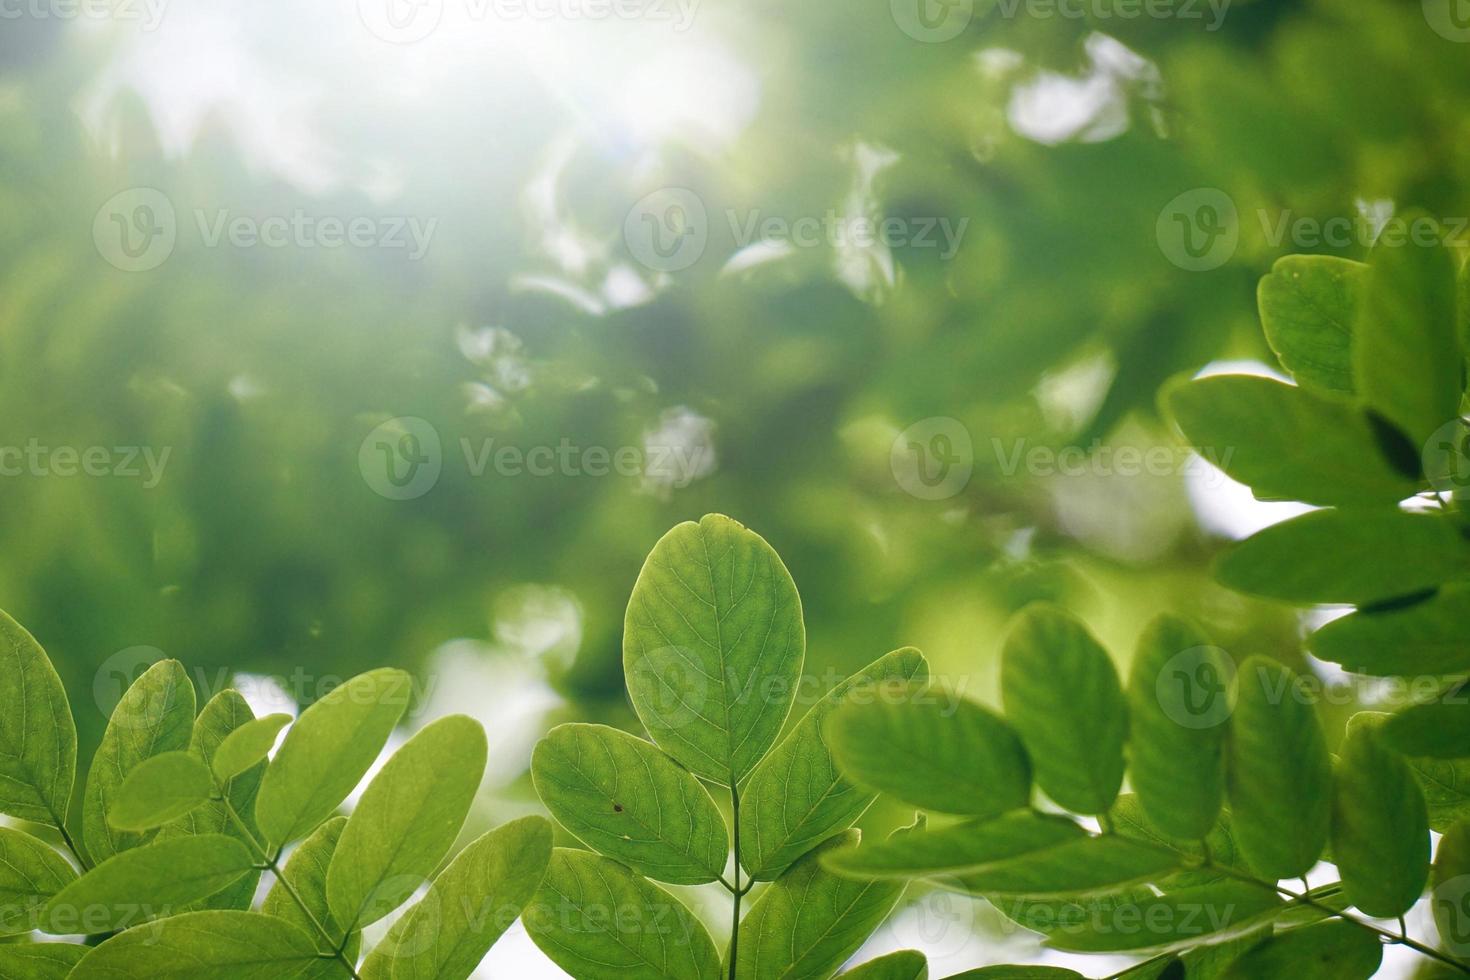 groene boom bladeren in de lente seizoen groene achtergrond foto